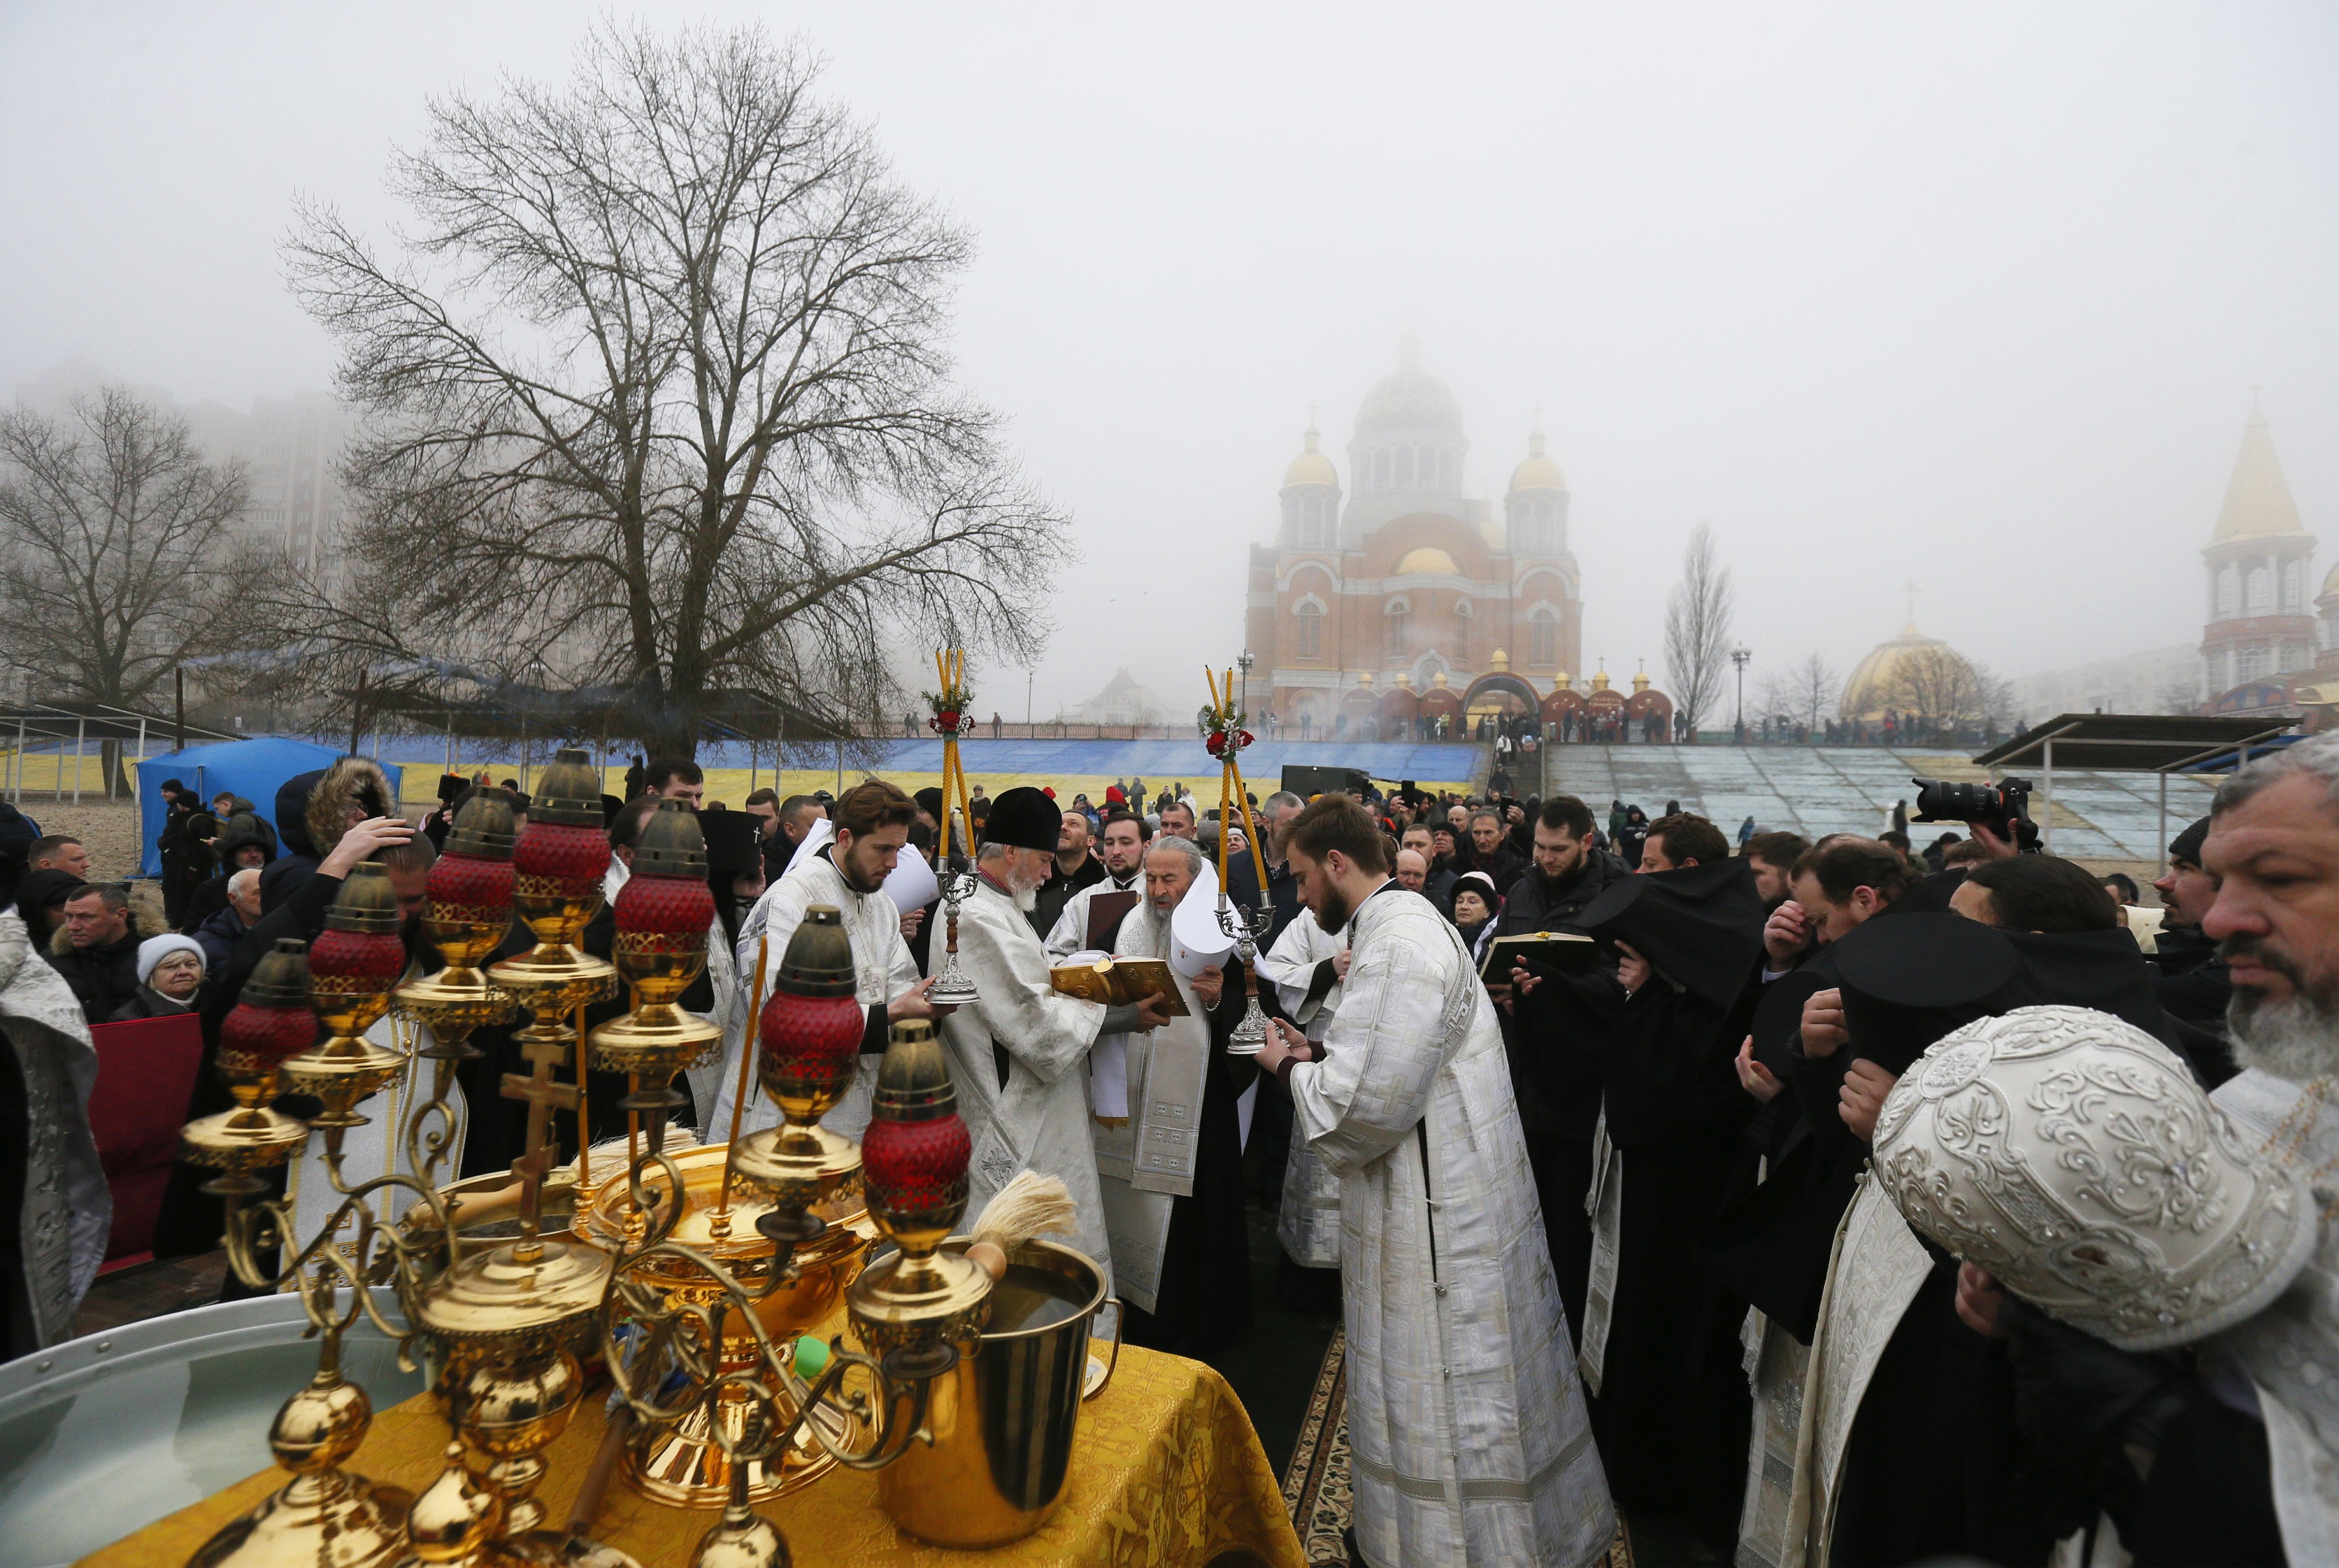 Orthodox Epiphany Celebration In Kyiv, Amid Russian Invasion Of Ukraine